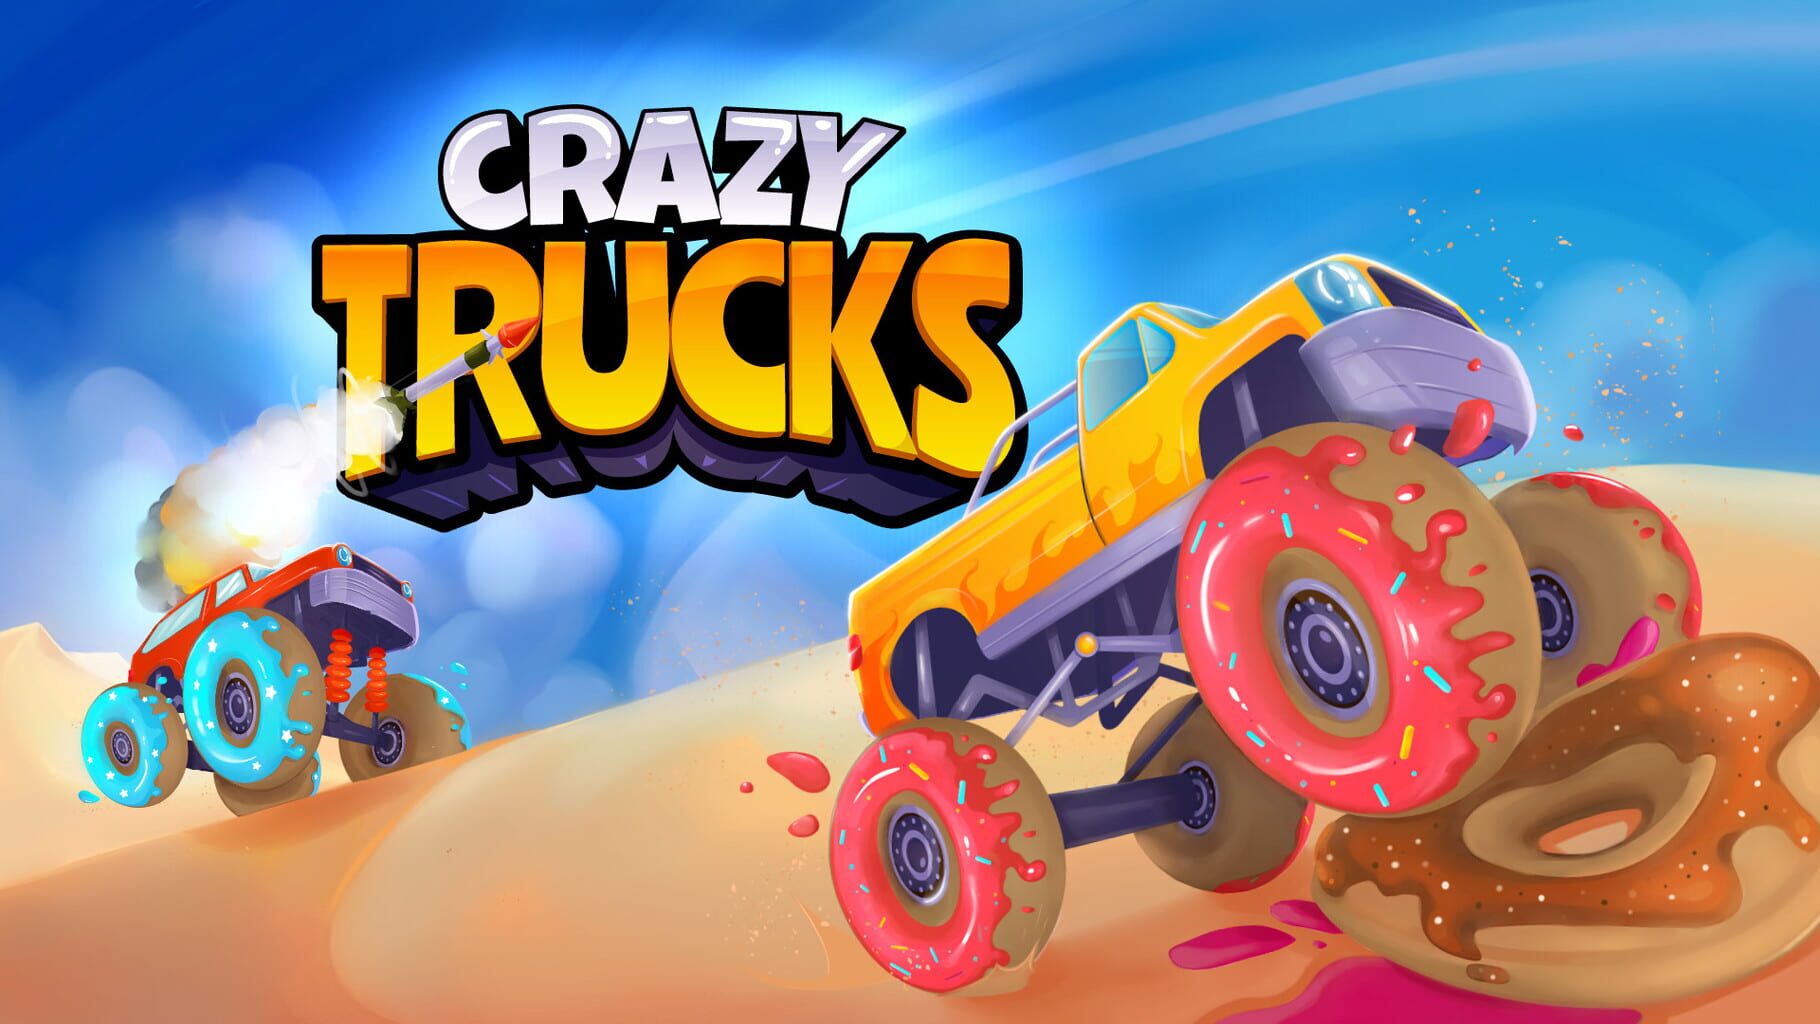 Crazy Trucks artwork